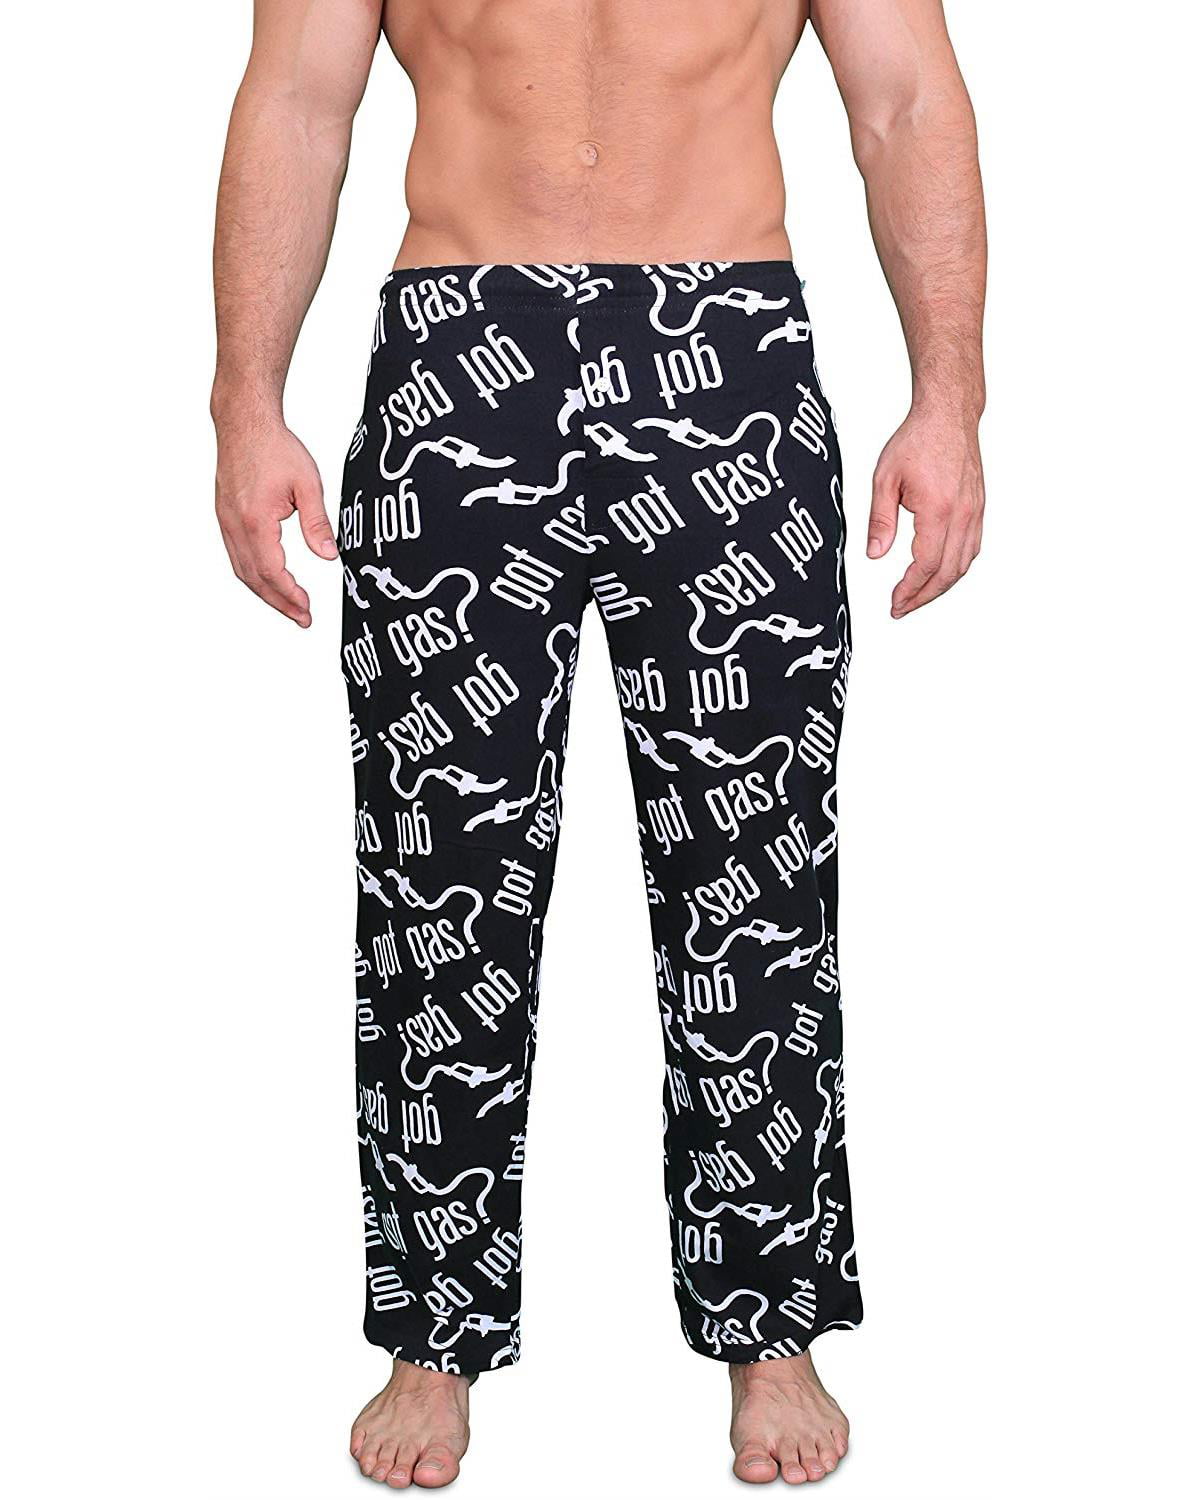 Mens Fun Pants Lounge Pajama Pants Boxers Adult Sleepwear, Gas, Size ...